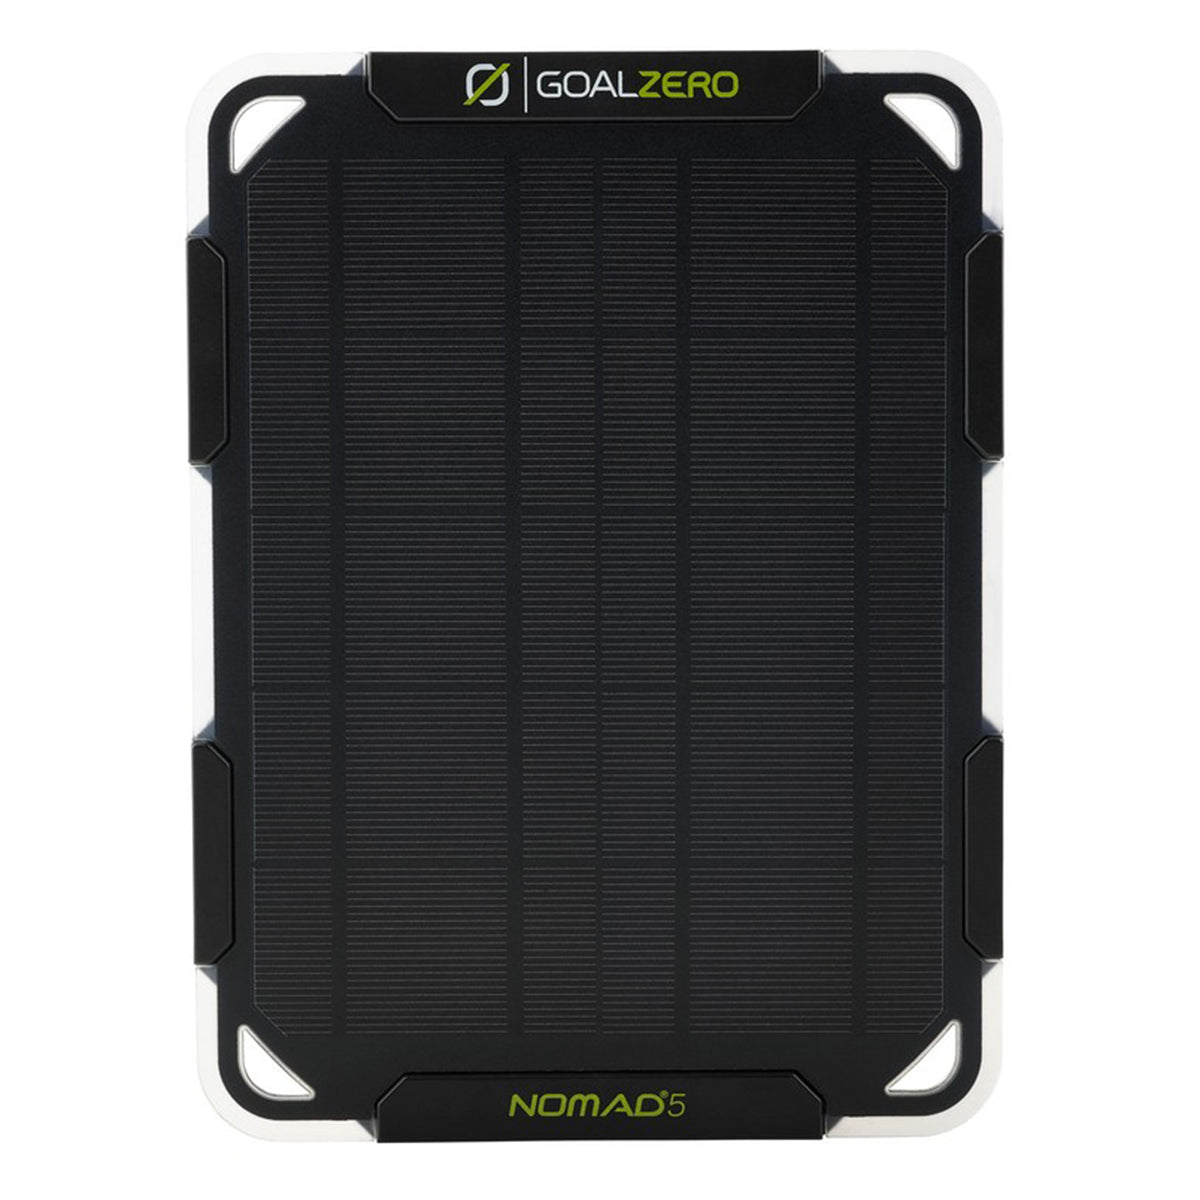 Goal Zero Nomad 5 Solar Panel in Goal Zero Nomad 5 Solar Panel by Goal Zero | Gear - goHUNT Shop by GOHUNT | Goal Zero - GOHUNT Shop